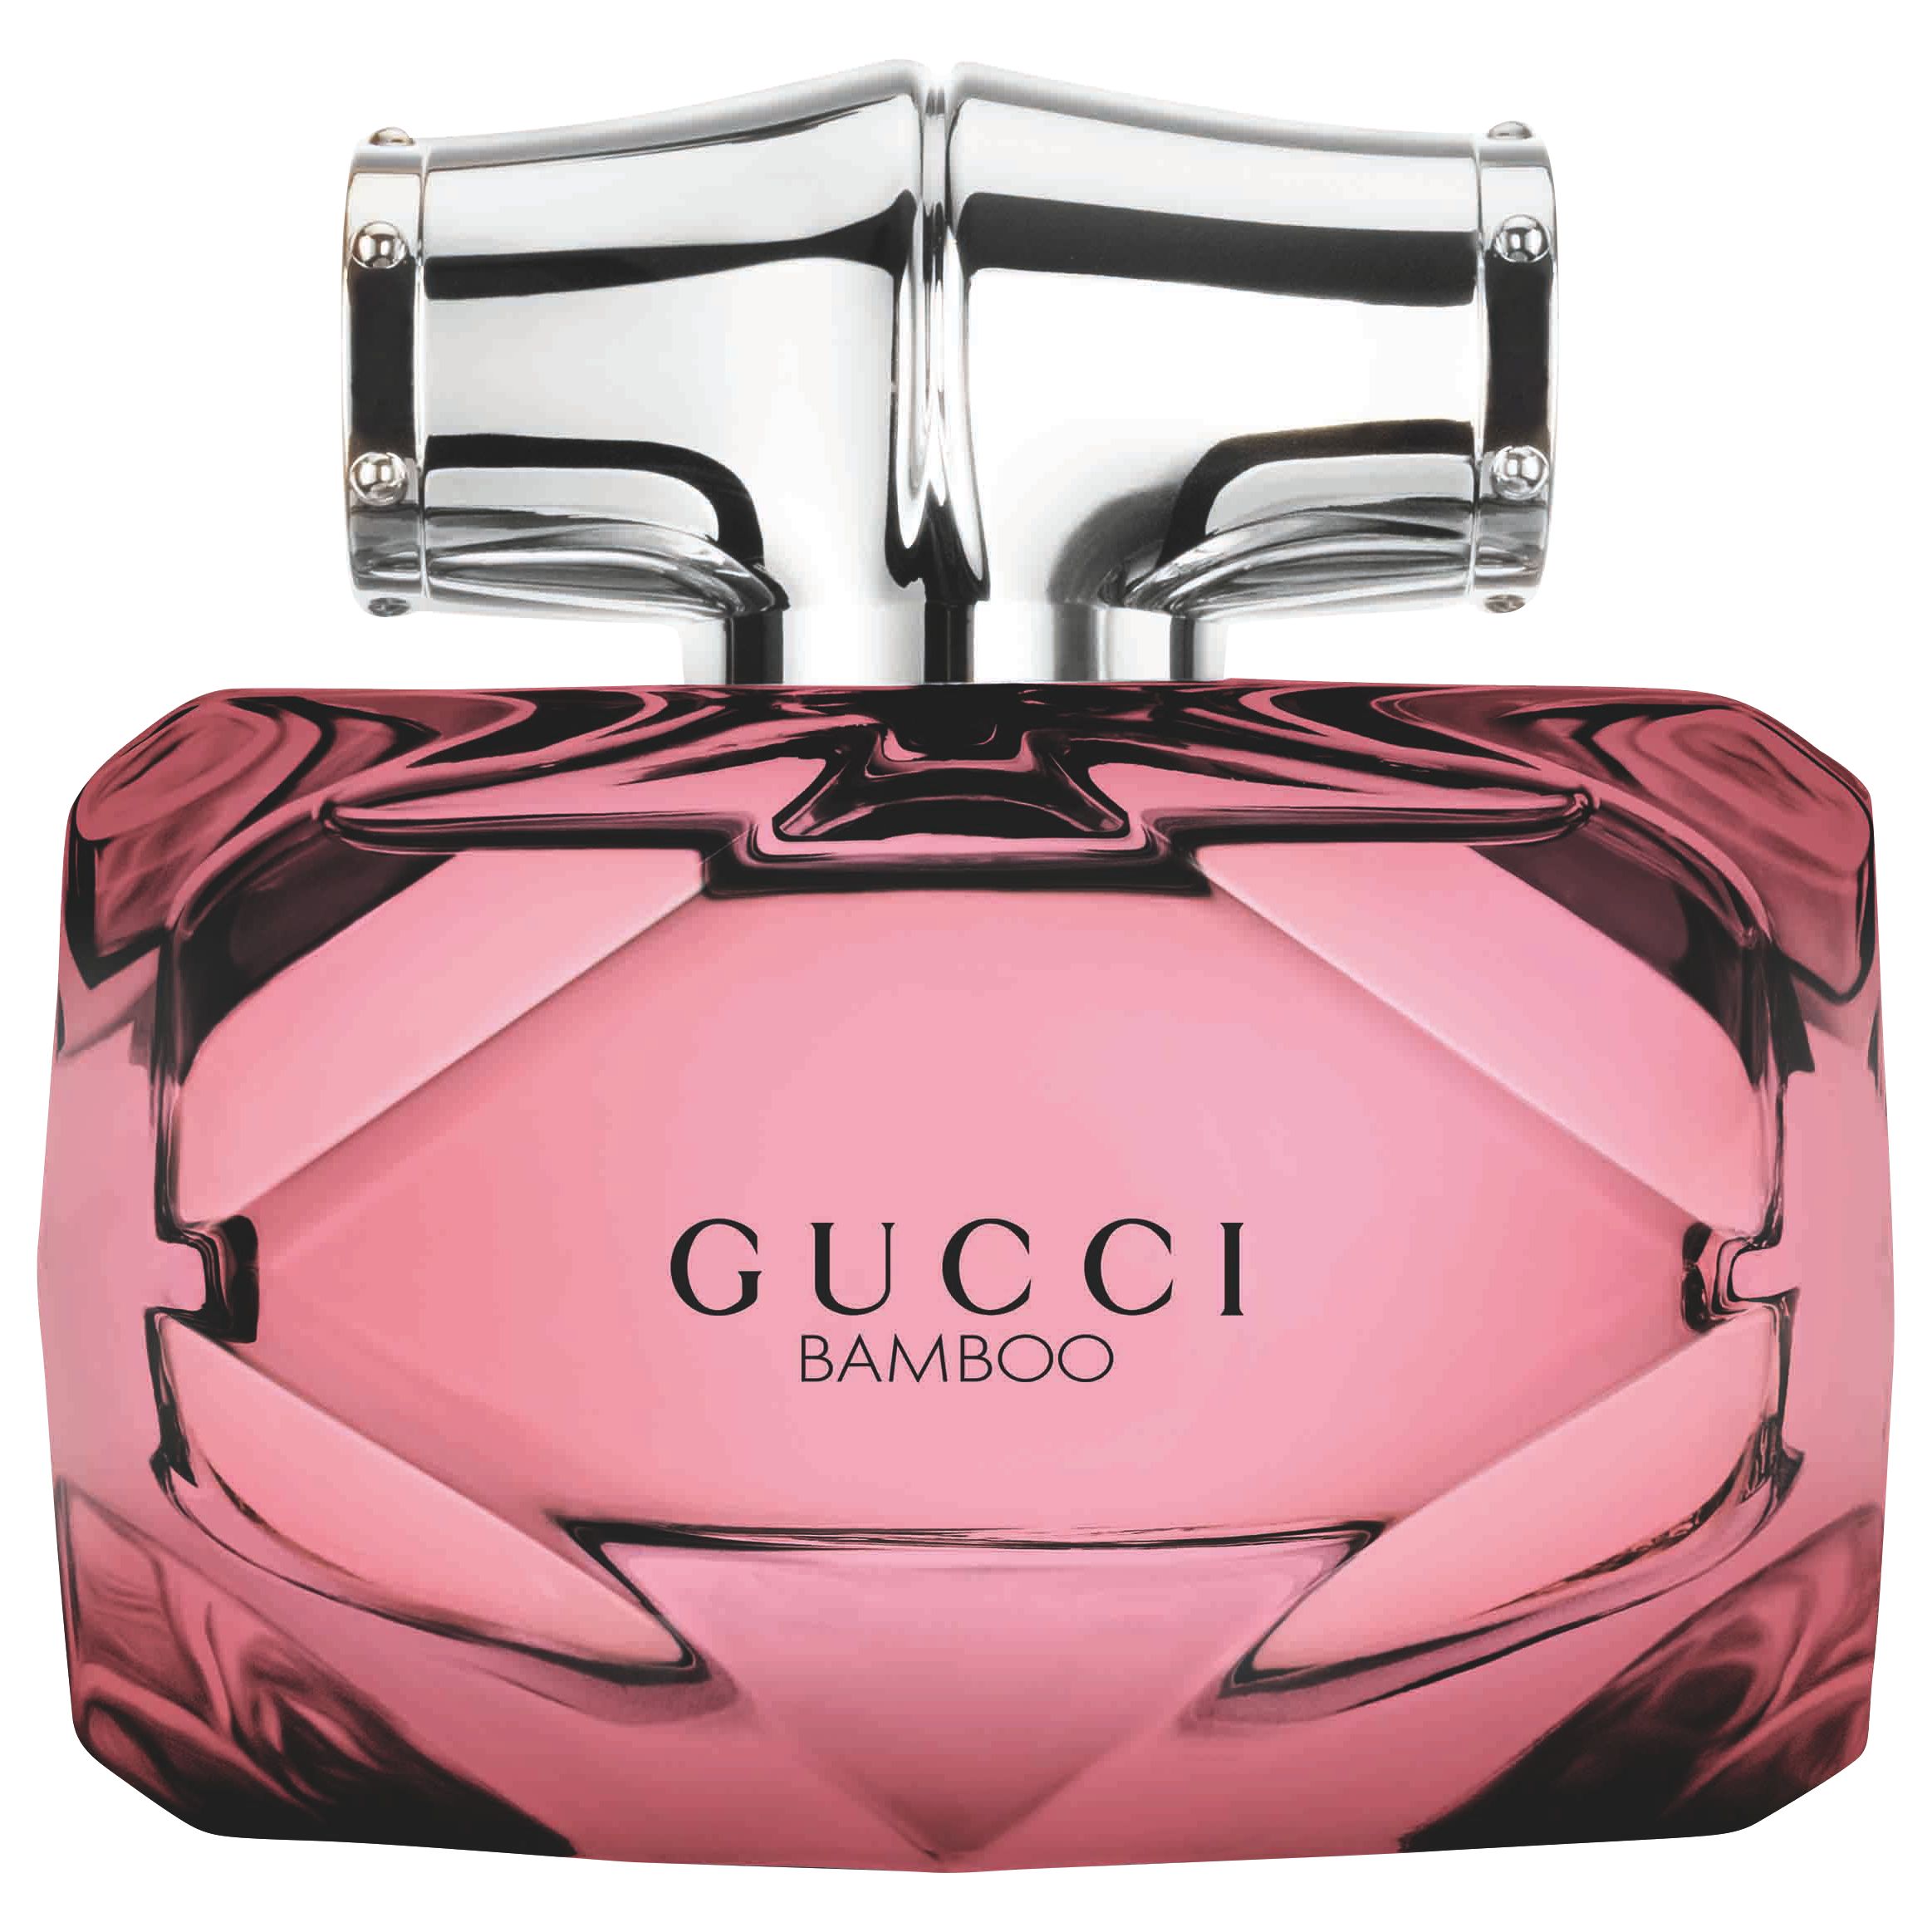 Gucci Bamboo Limited Edition Eau de Parfum, 50ml